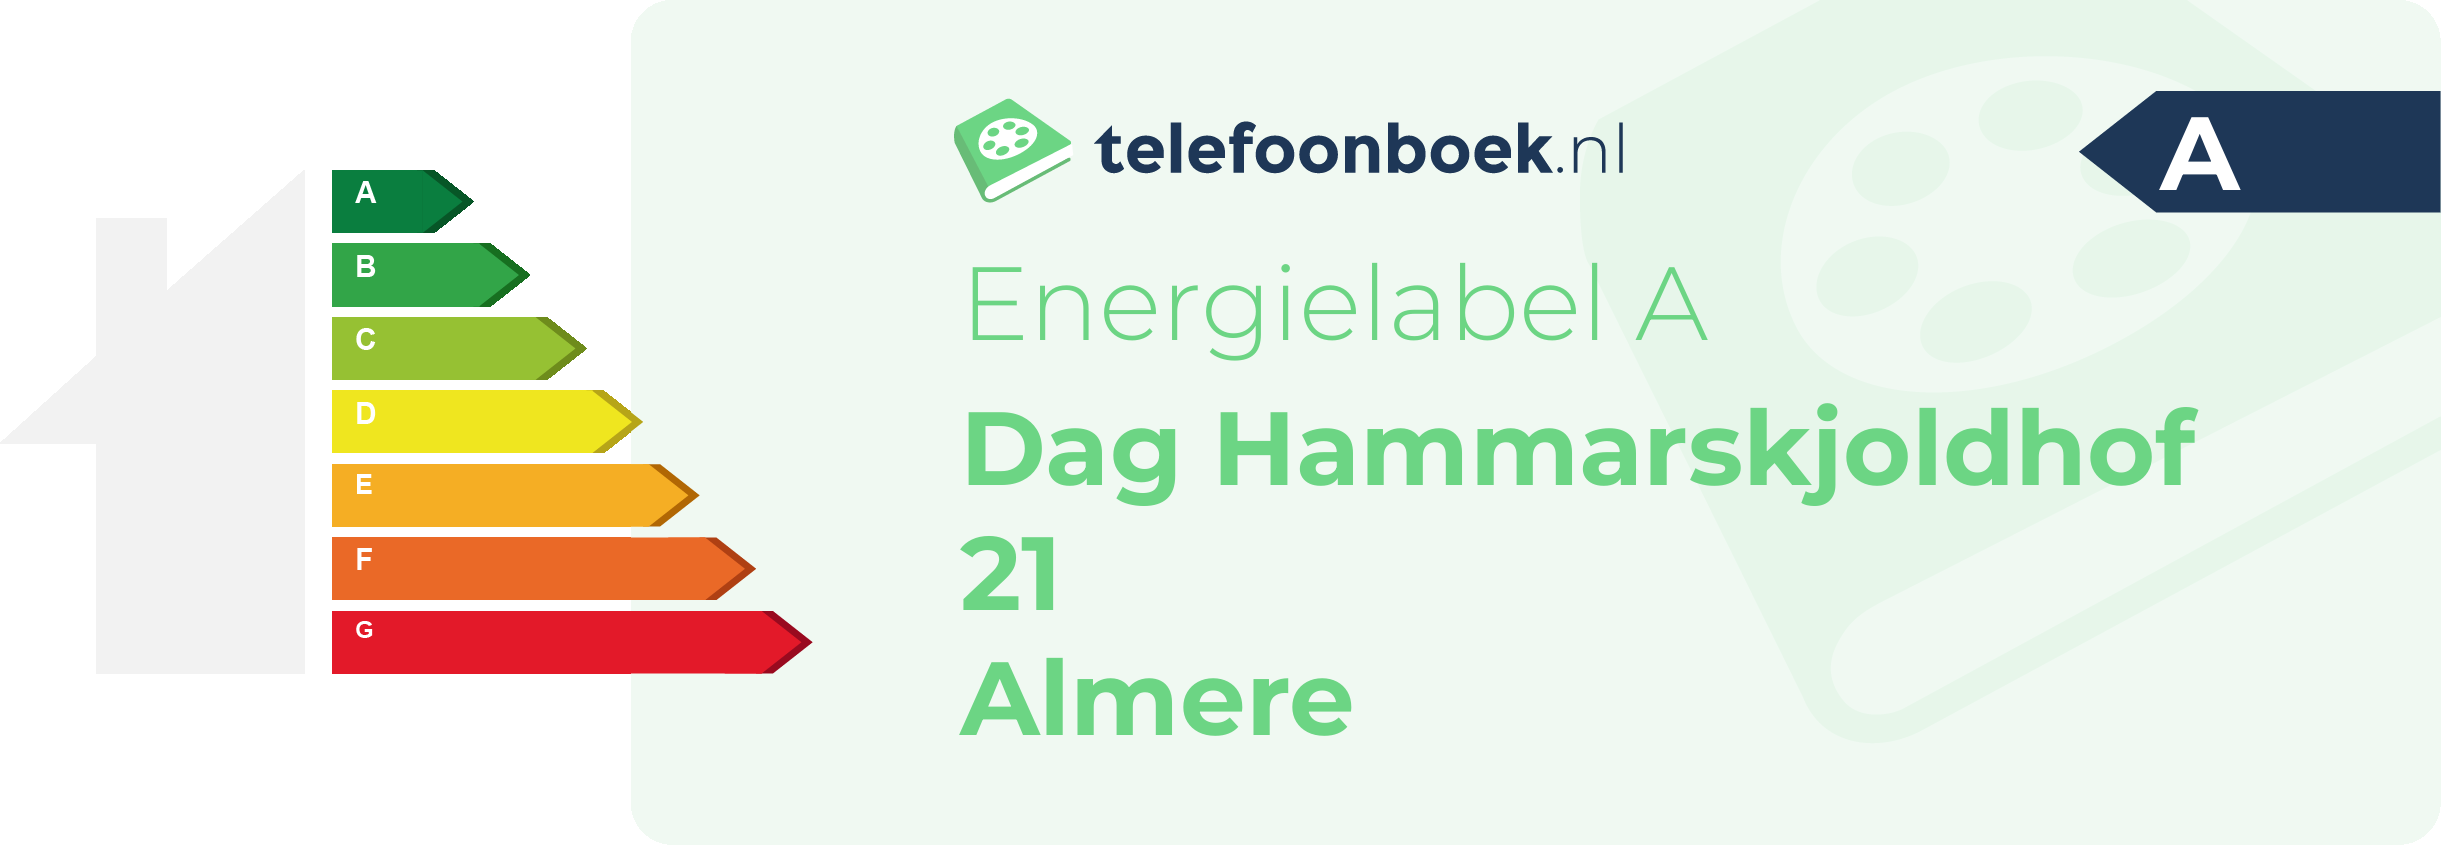 Energielabel Dag Hammarskjoldhof 21 Almere